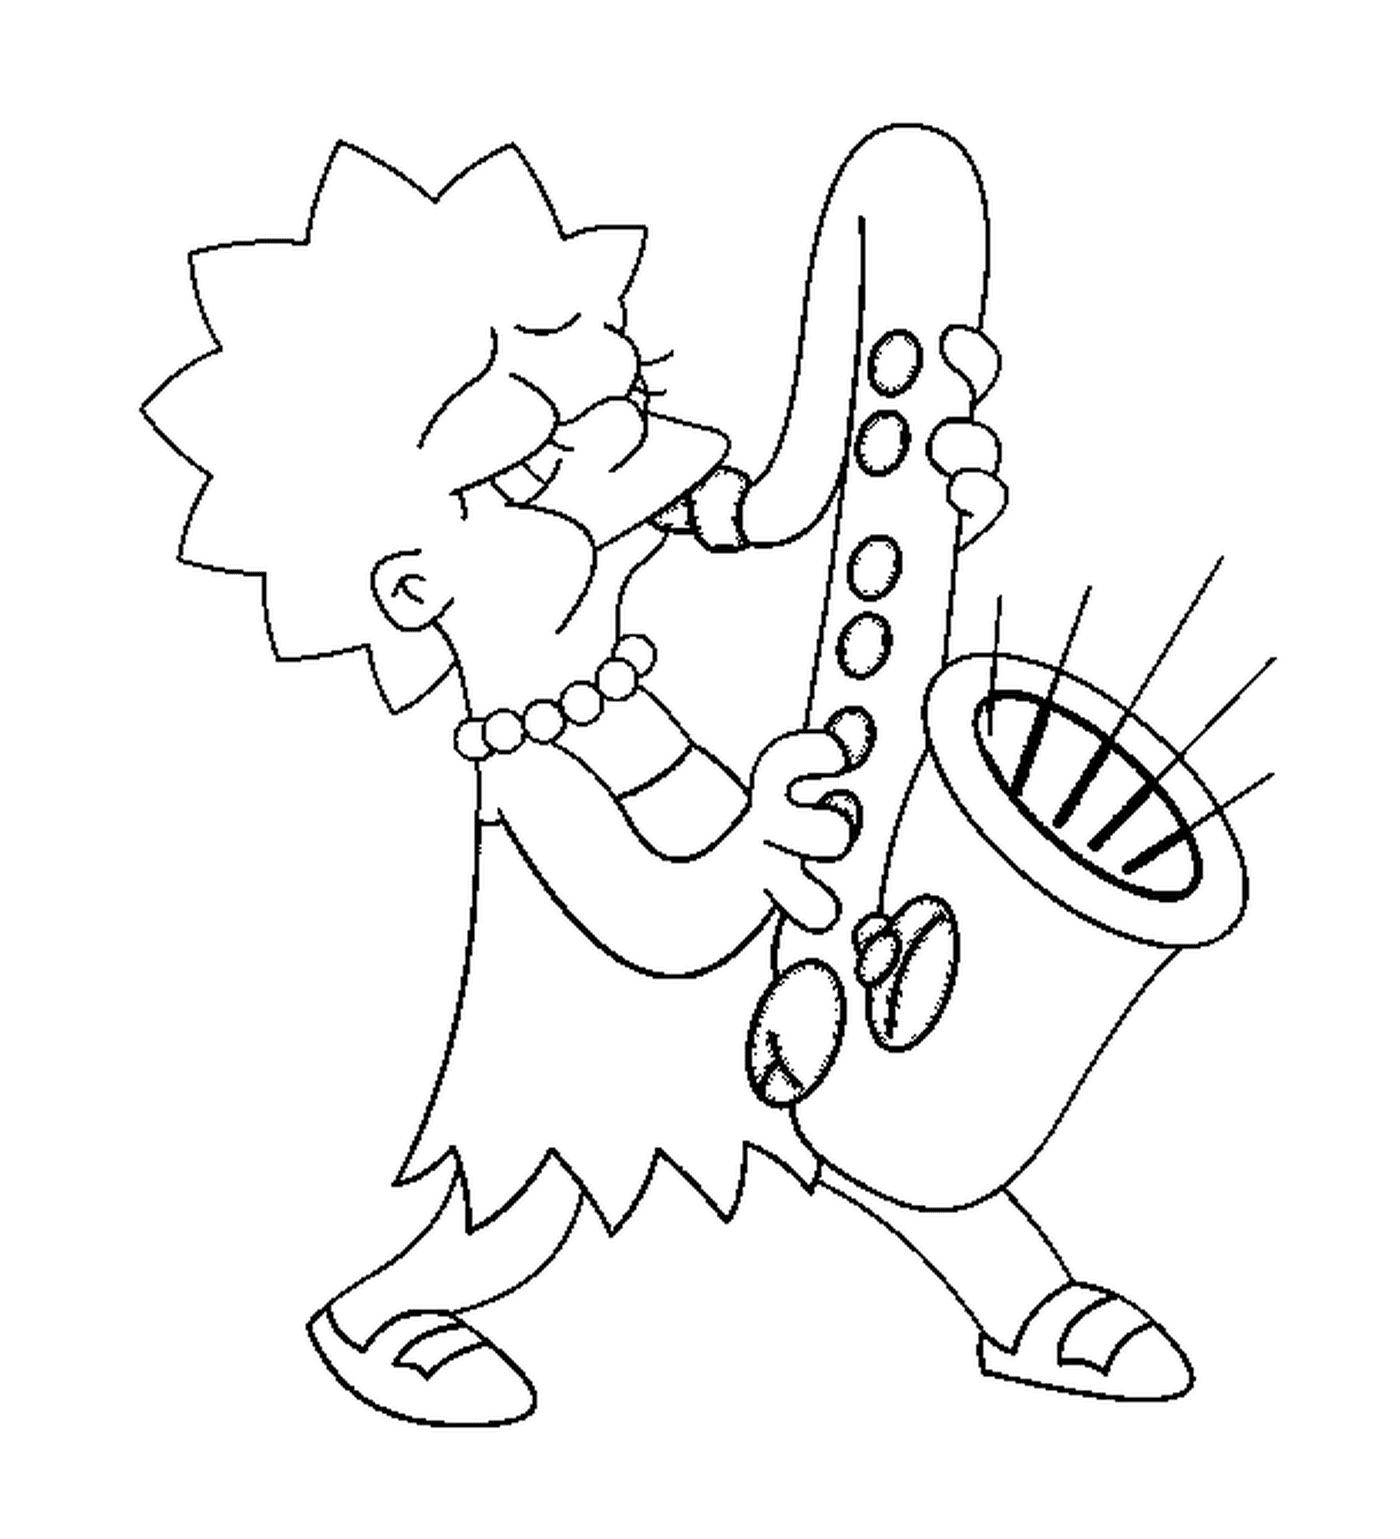  Lisa suona il sassofono armonico 